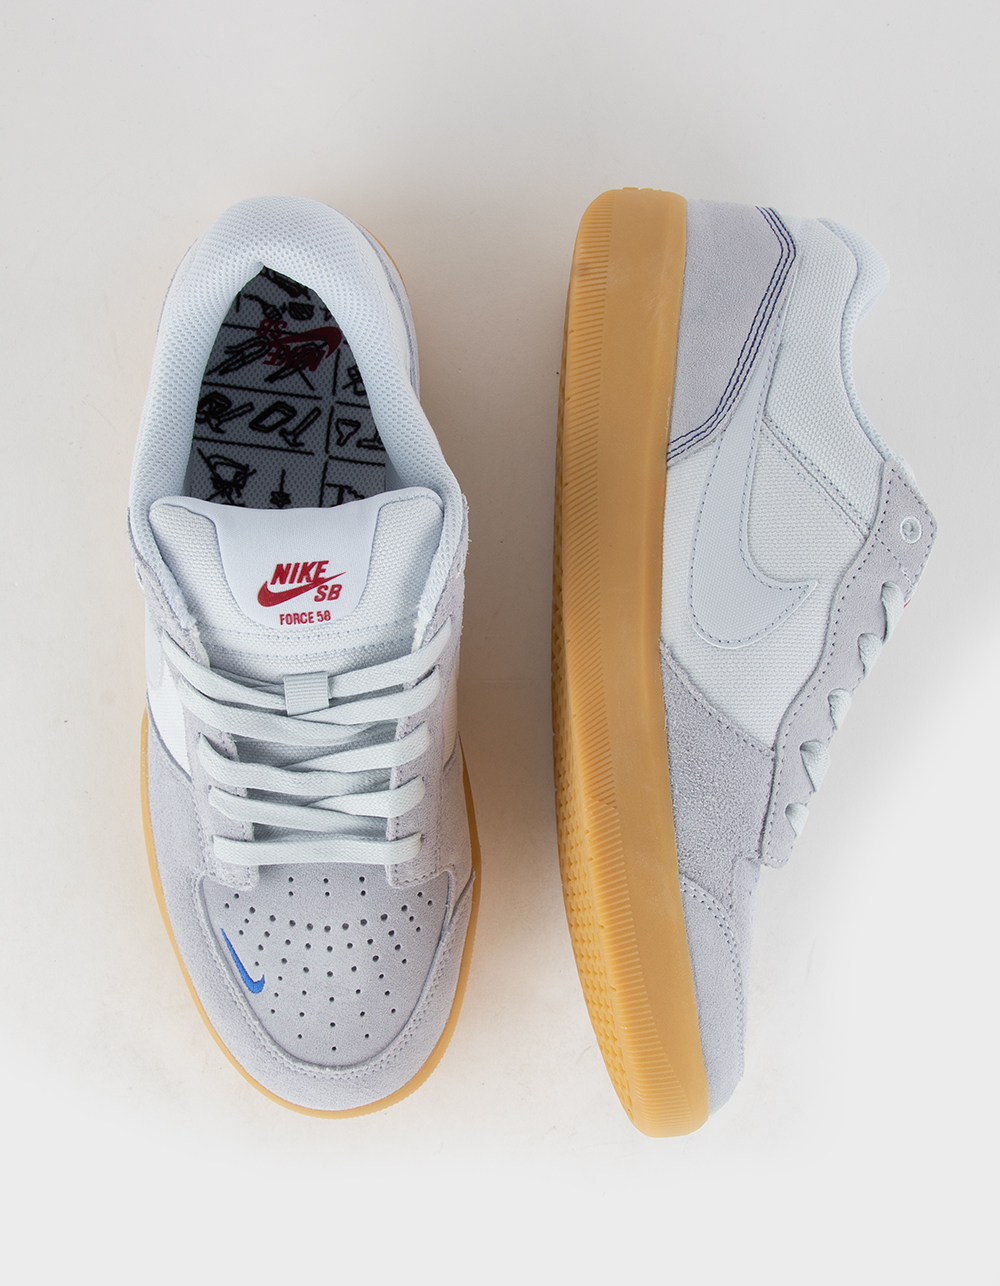 Nike SB Force 58 Premium Grey, Blue & Gum Skate Shoes